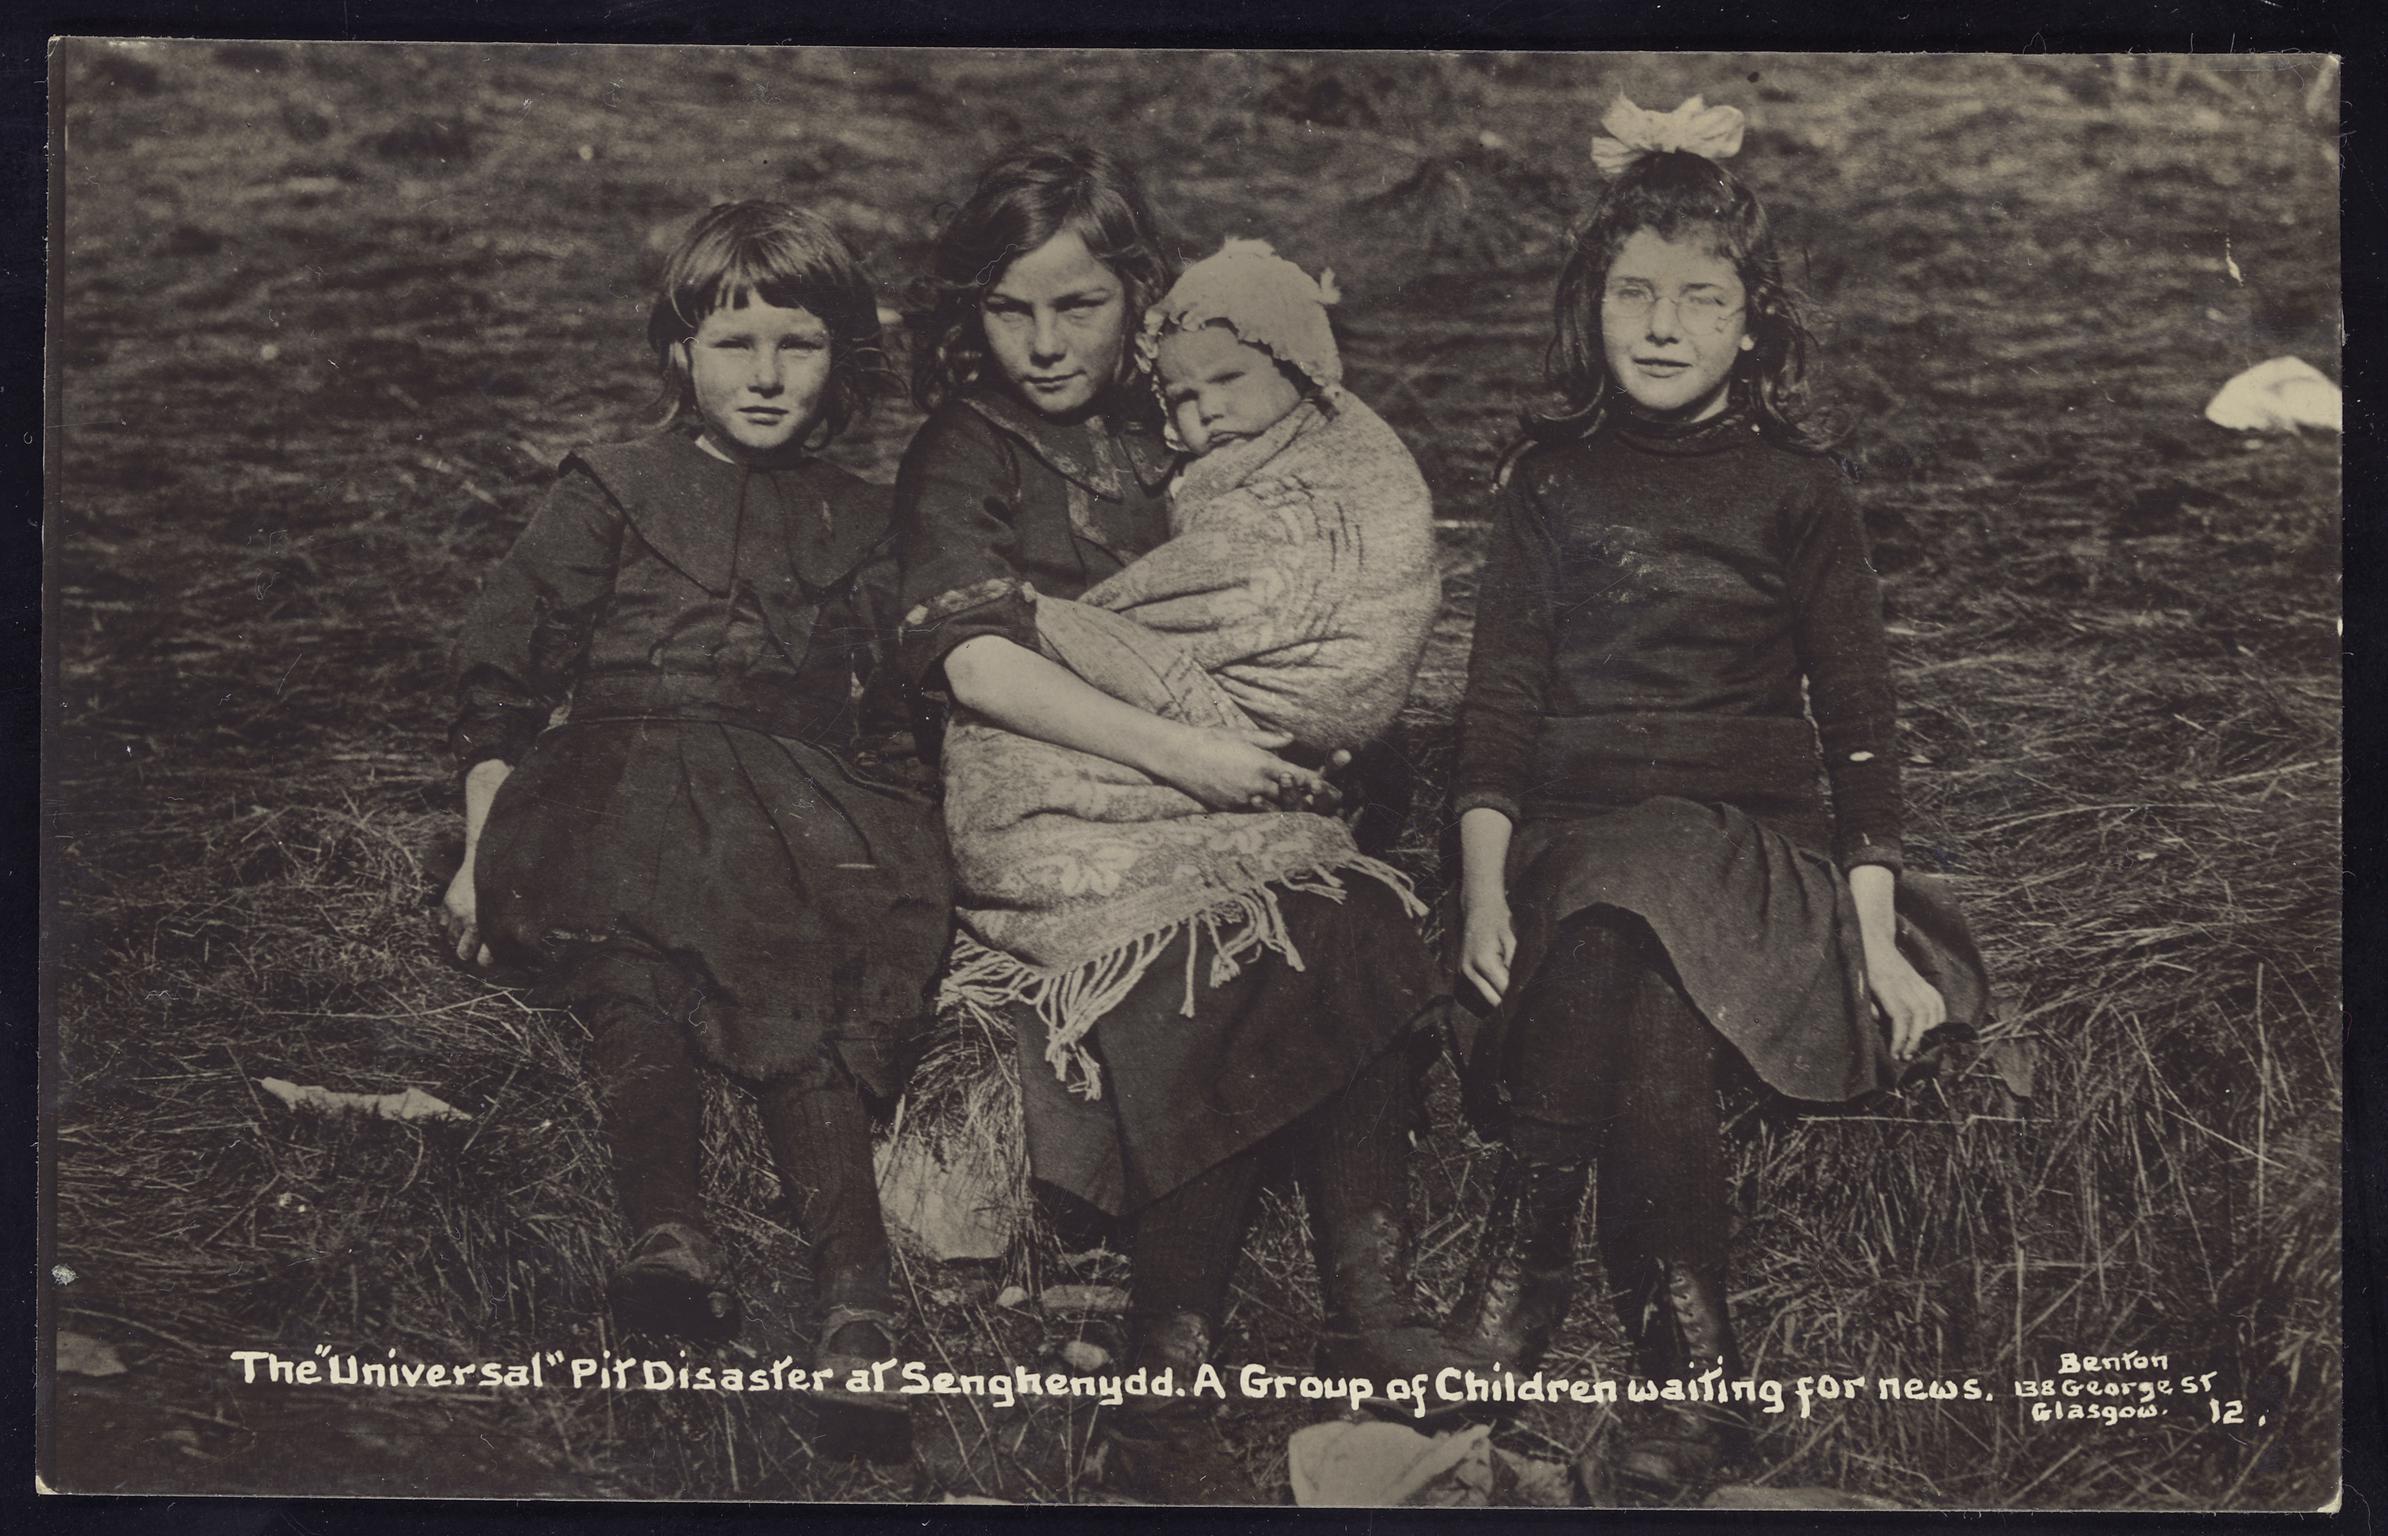 Senghenydd pit disaster, 1913, photo